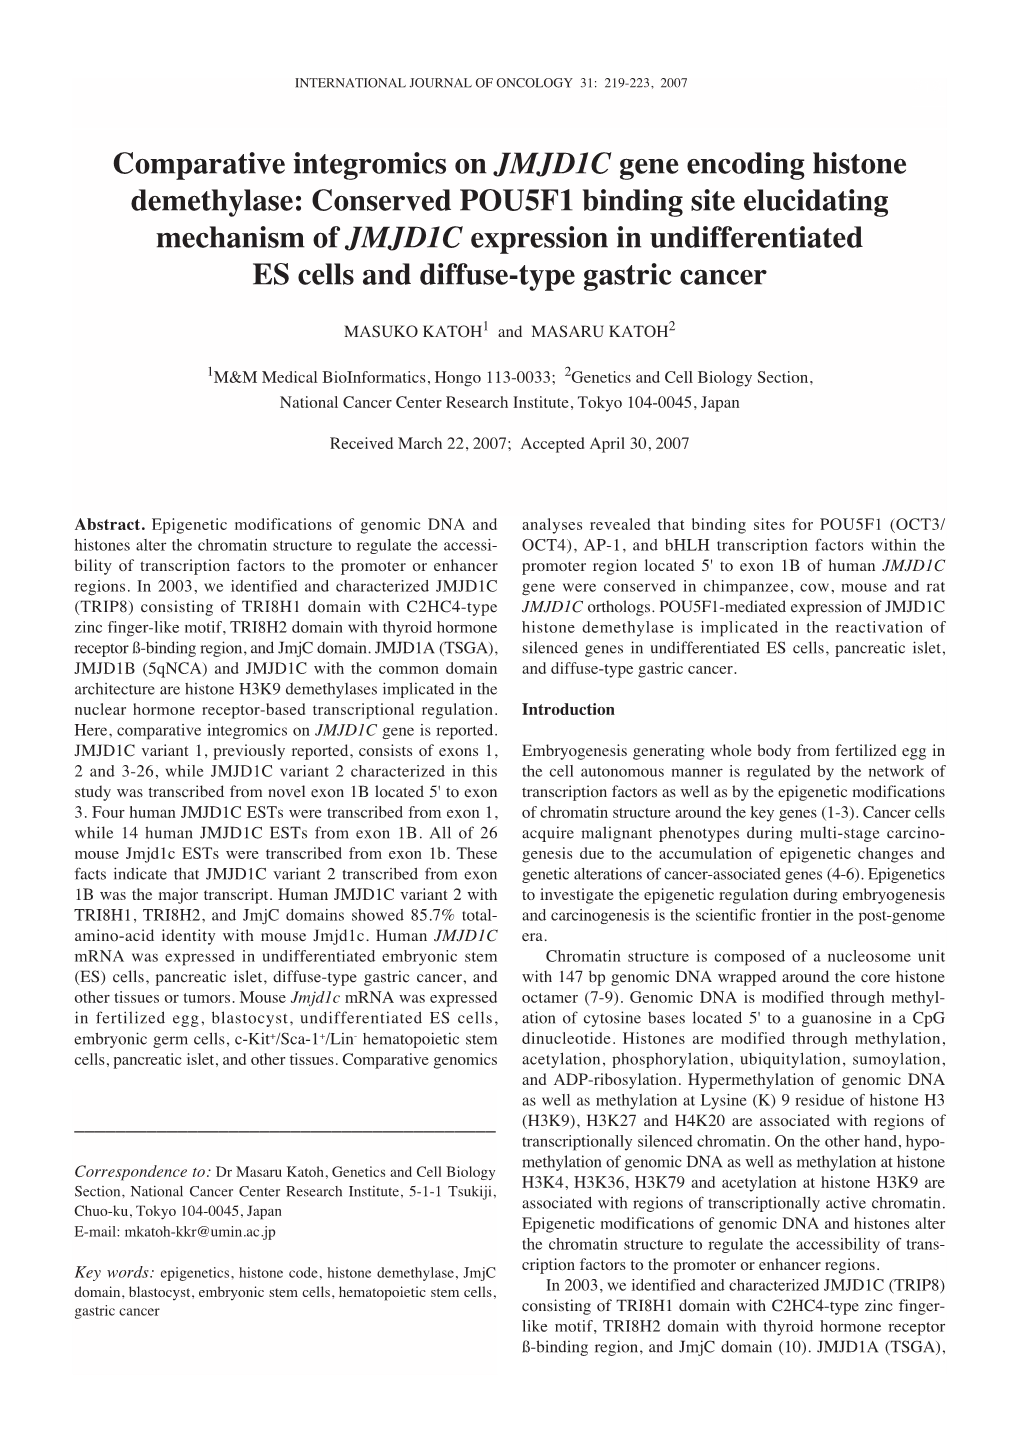 Comparative Integromics on JMJD1C Gene Encoding Histone Demethylase